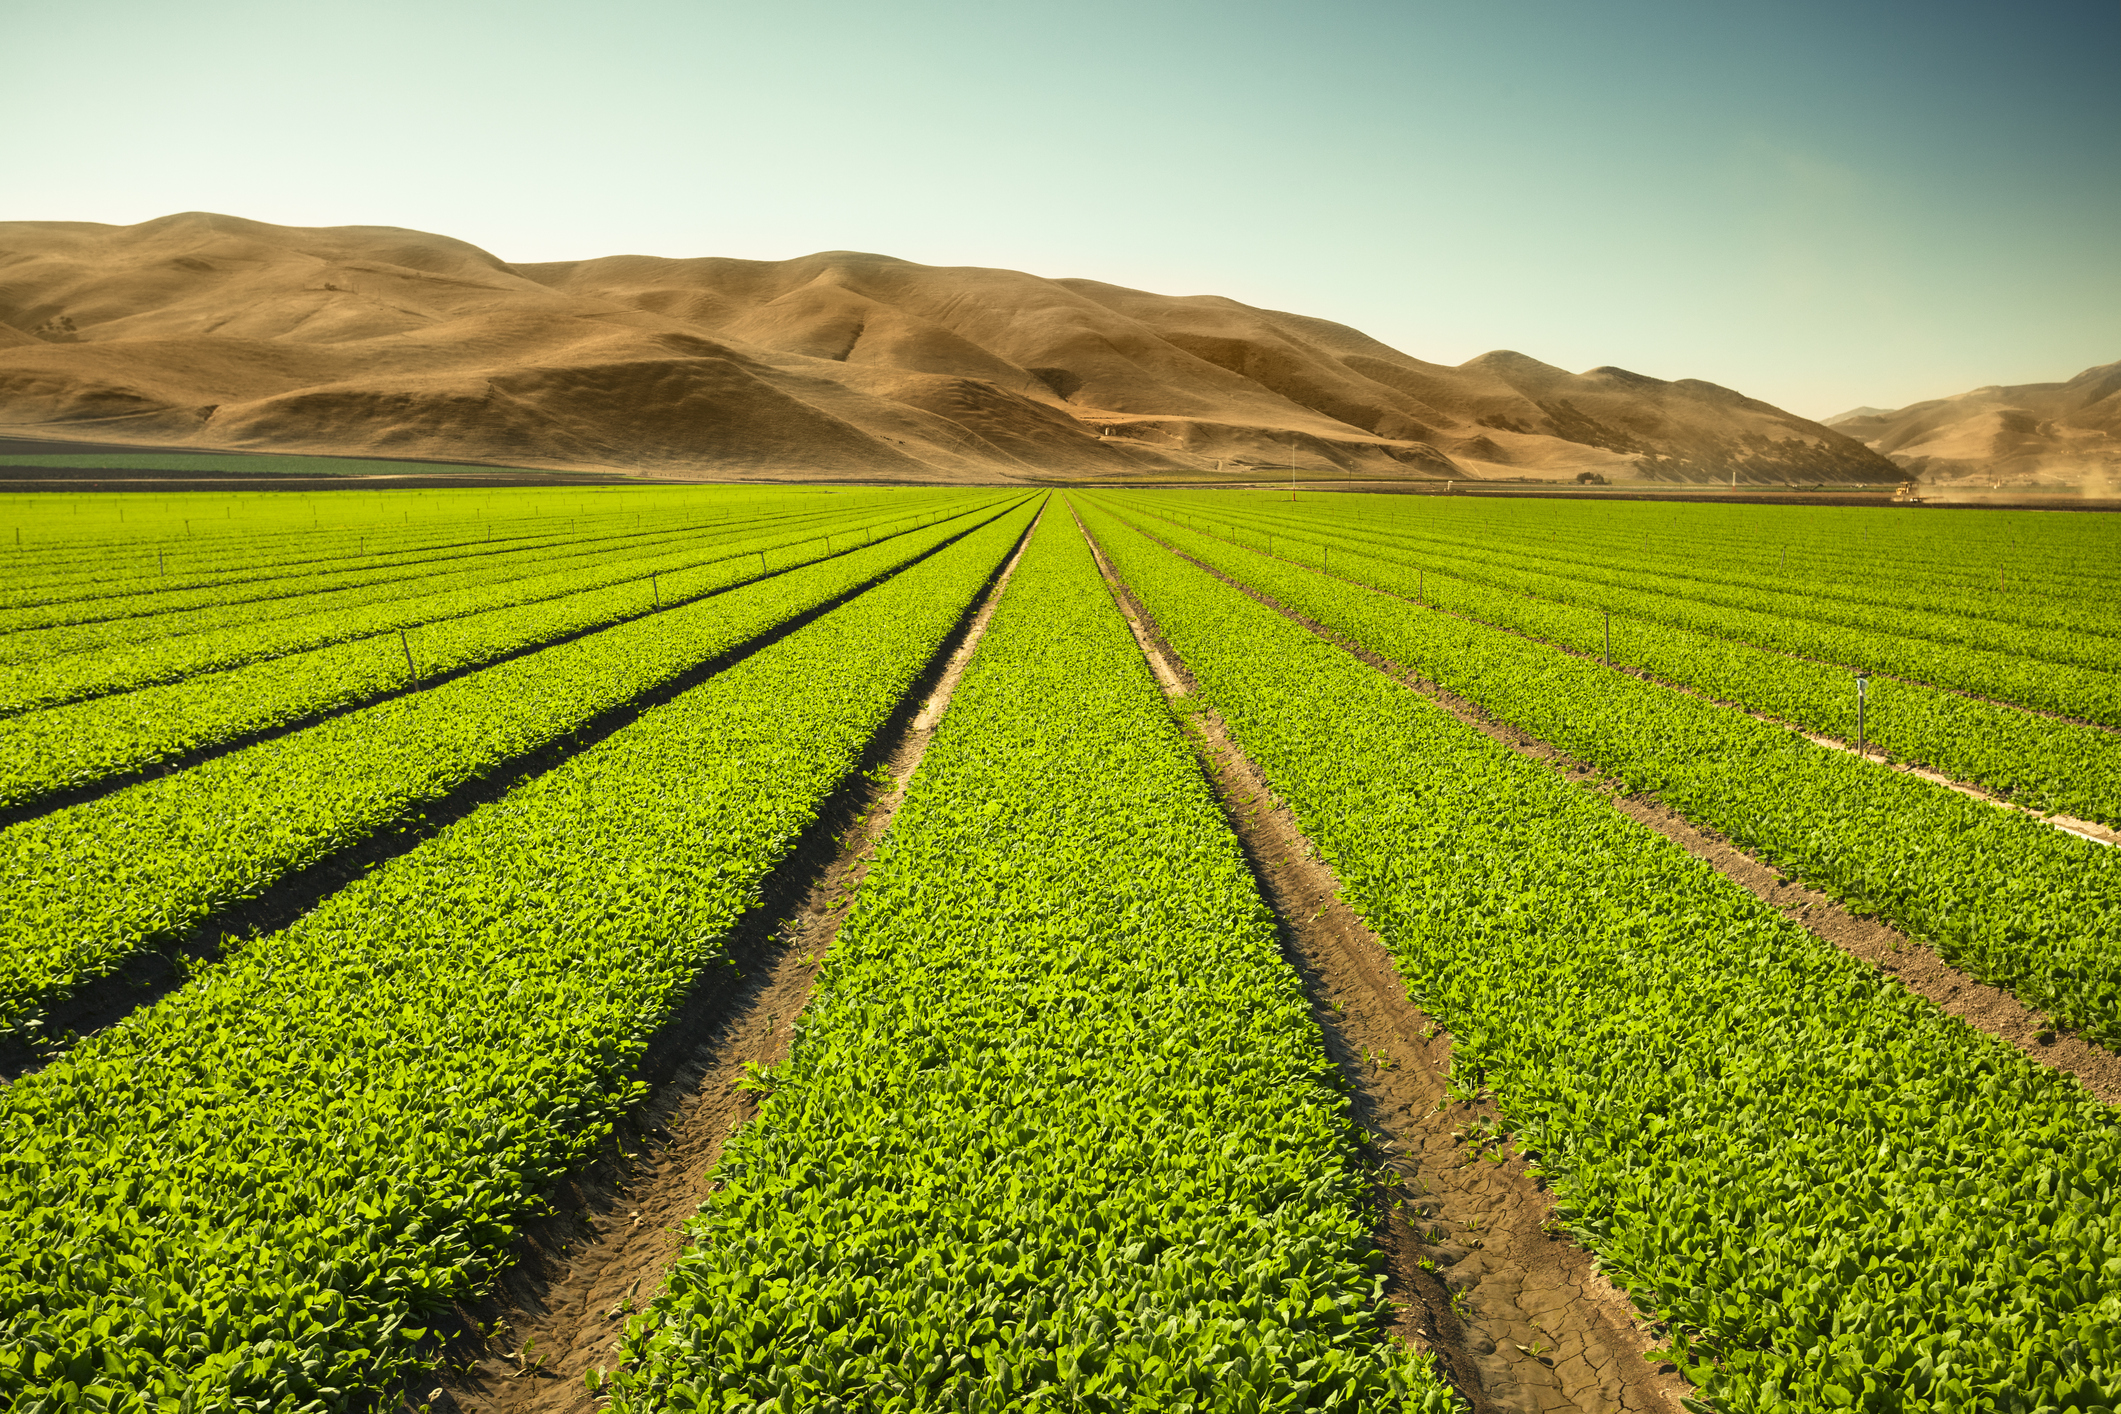 "A green row celery field in the Salinas Valley, California USA"